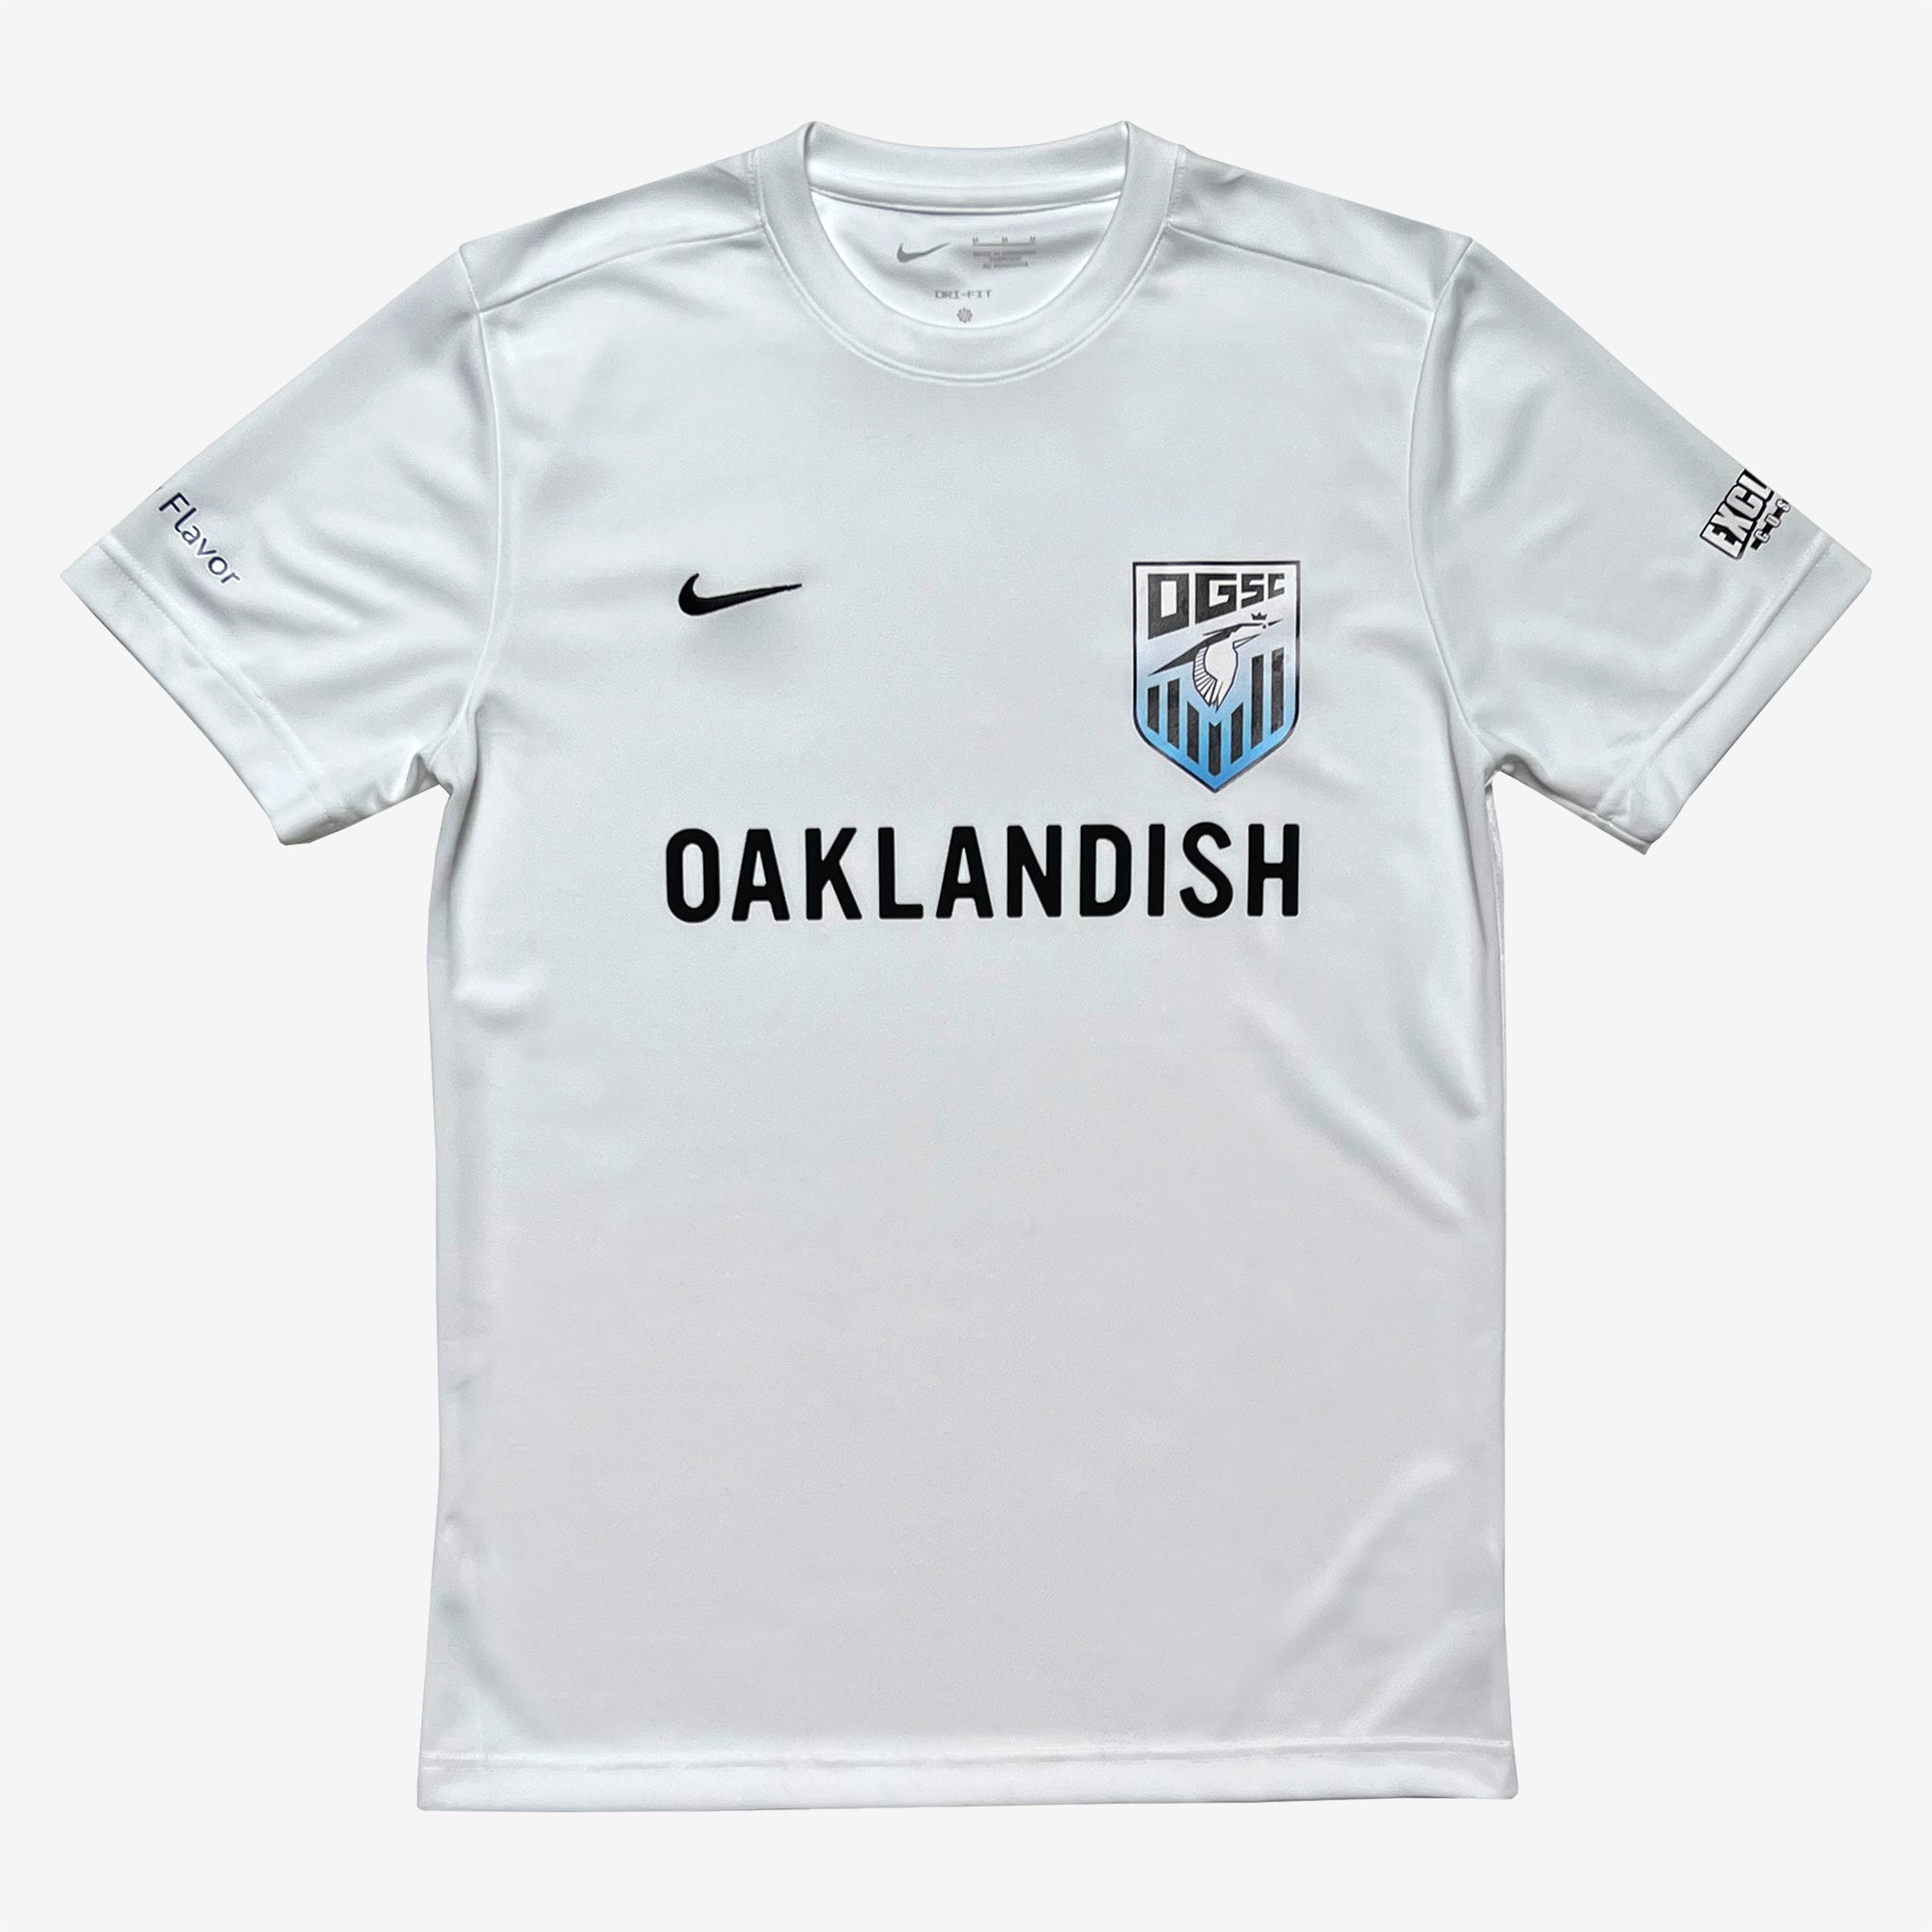 White home game soccer jersey with Oaklandish wordmark, Oakland Genesis heron logo and Nike logo. 